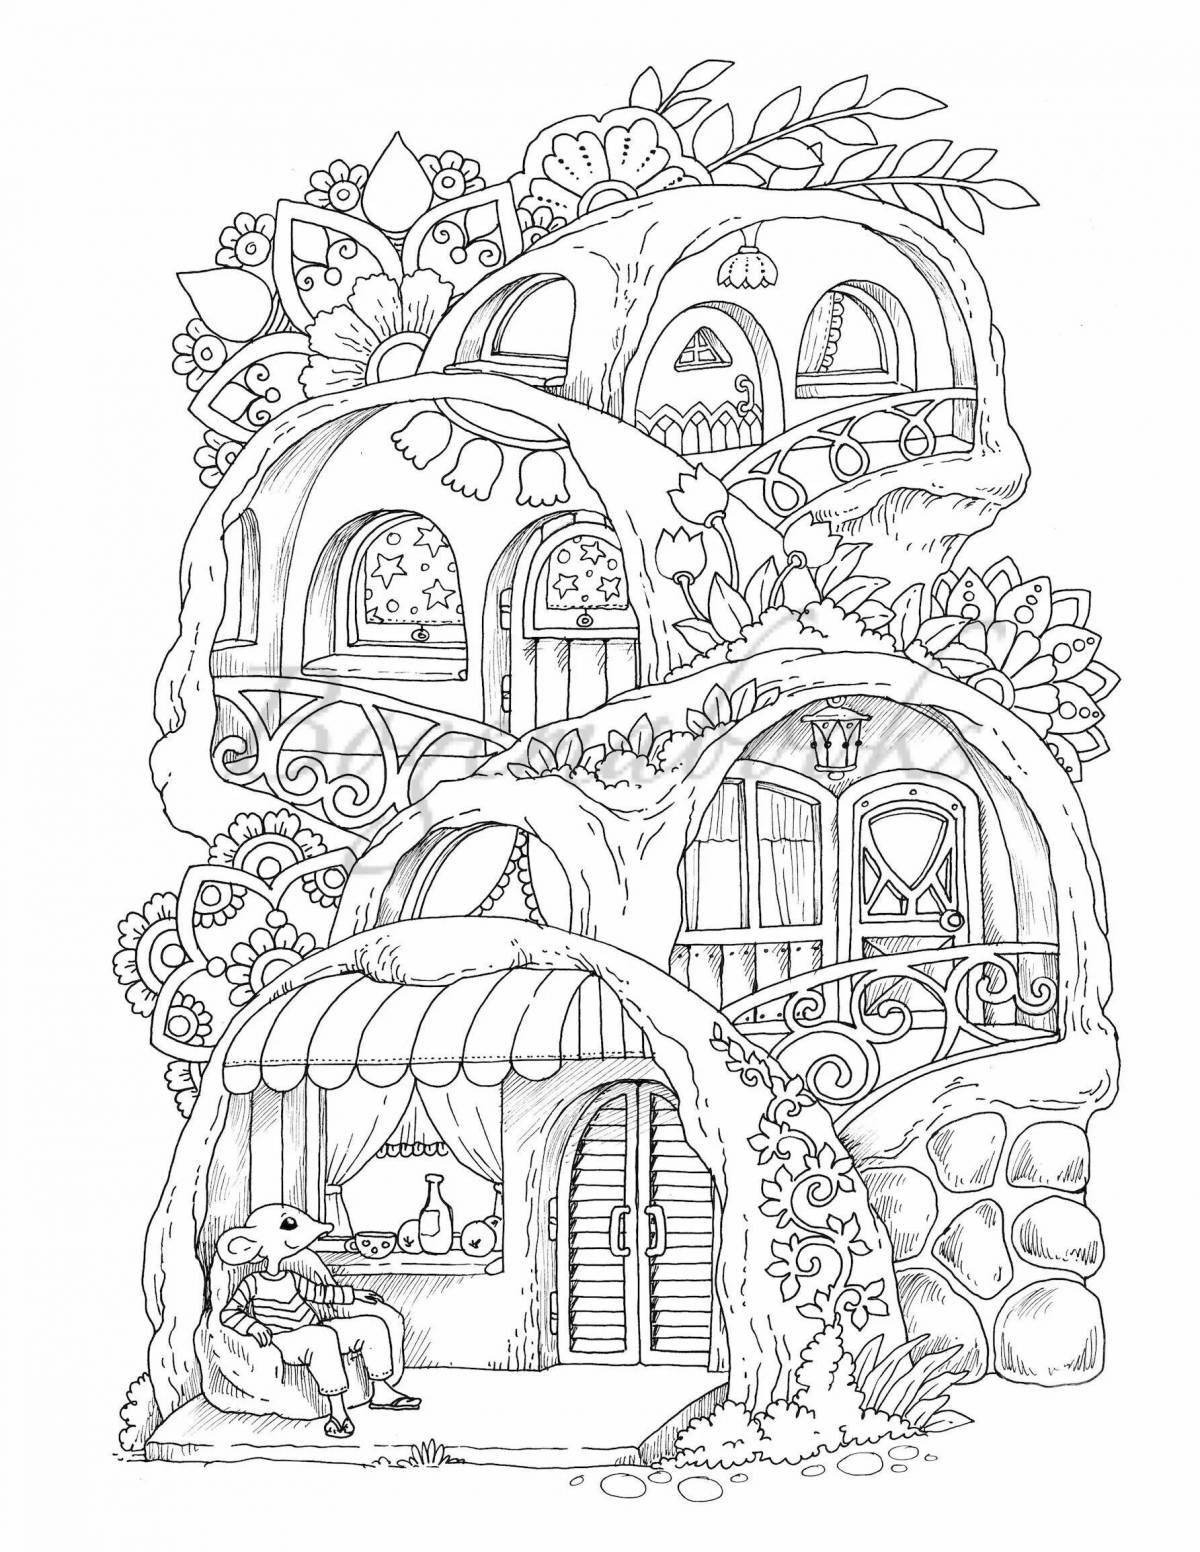 Magic house coloring book